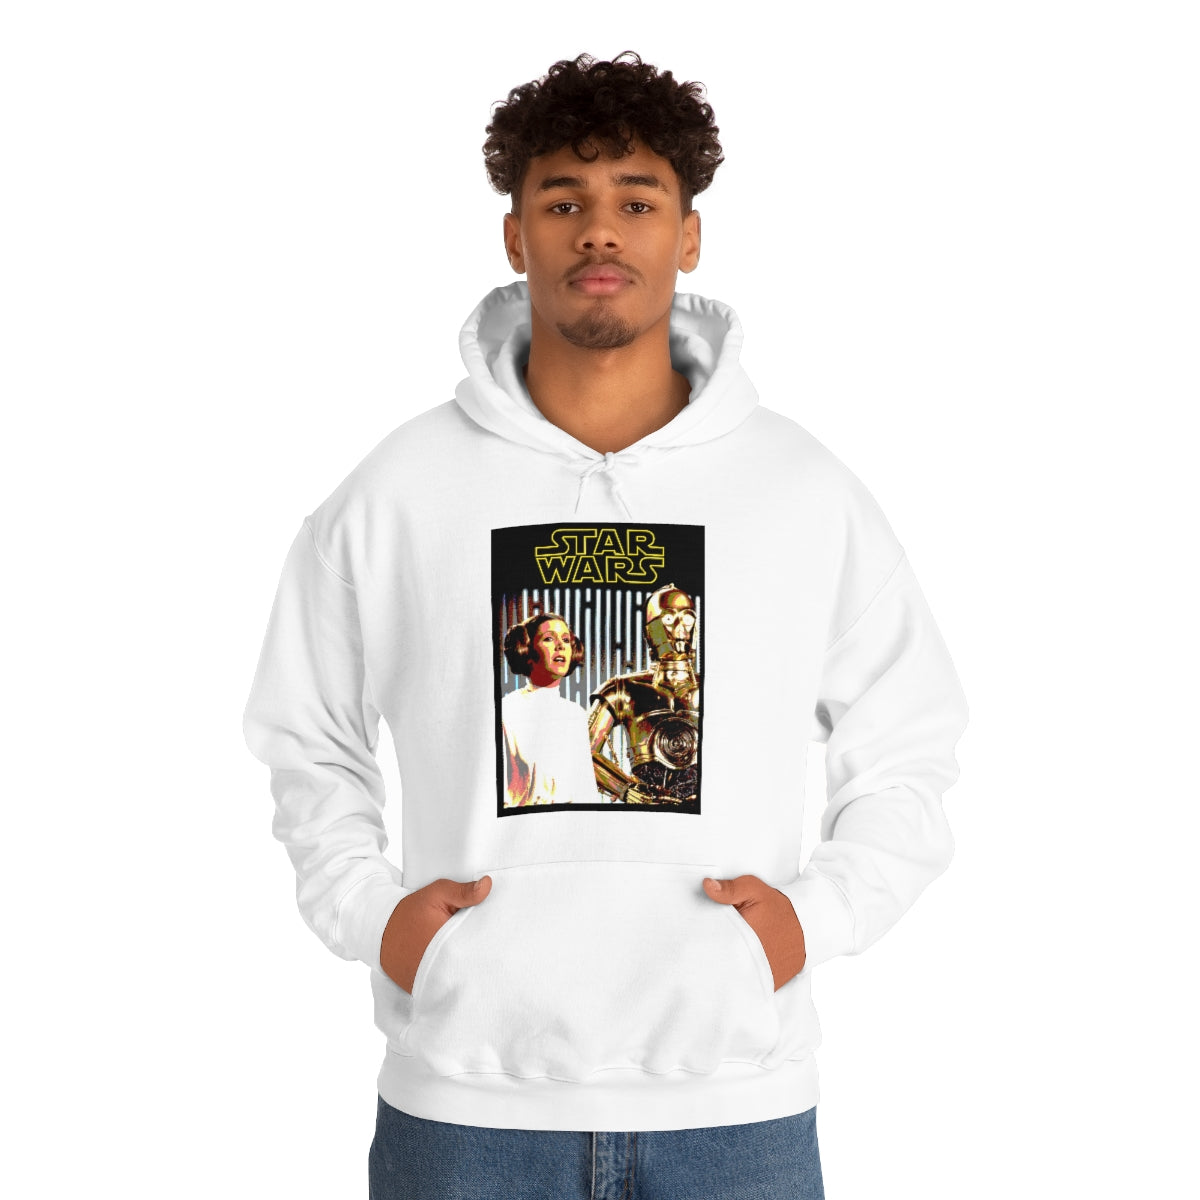 Star Wars Pop Culture Hooded Sweatshirt